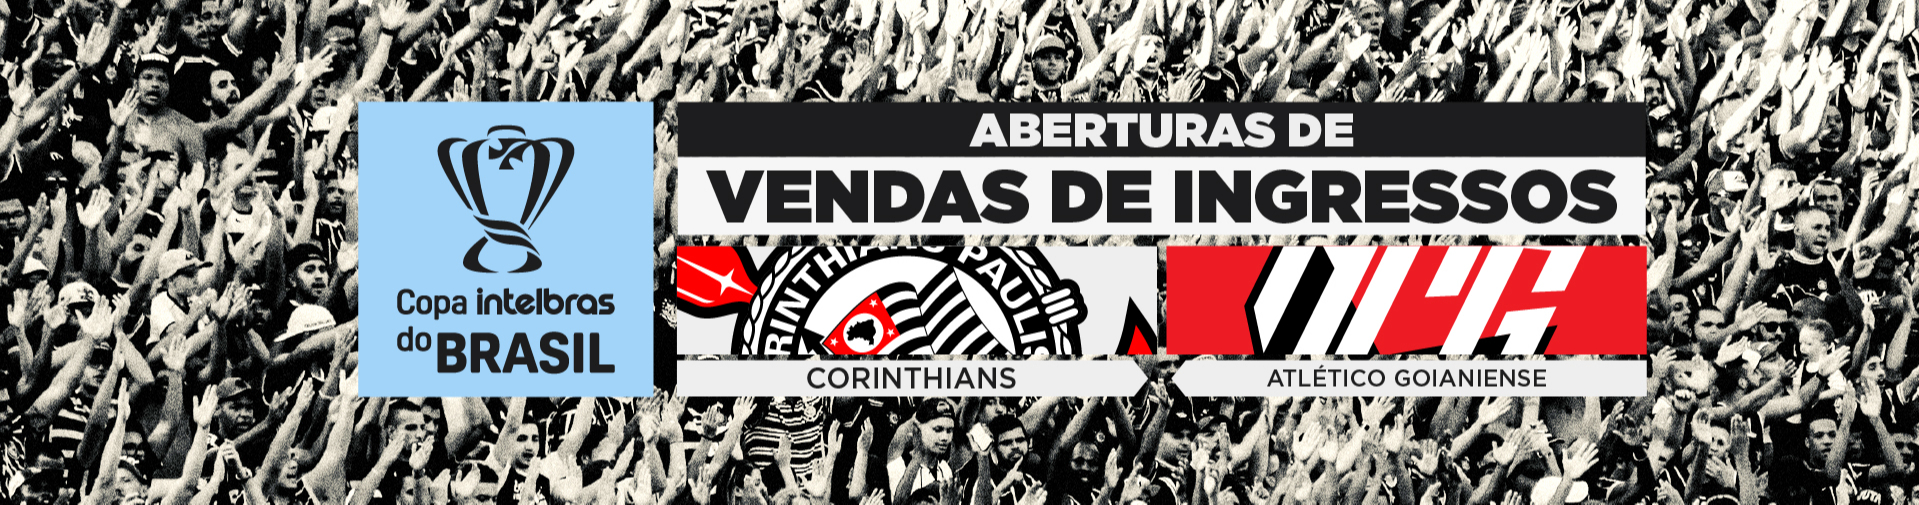 Copa do Brasil – Ingressos: Corinthians x Atlético-GO (17/8) - Neo Química Arena